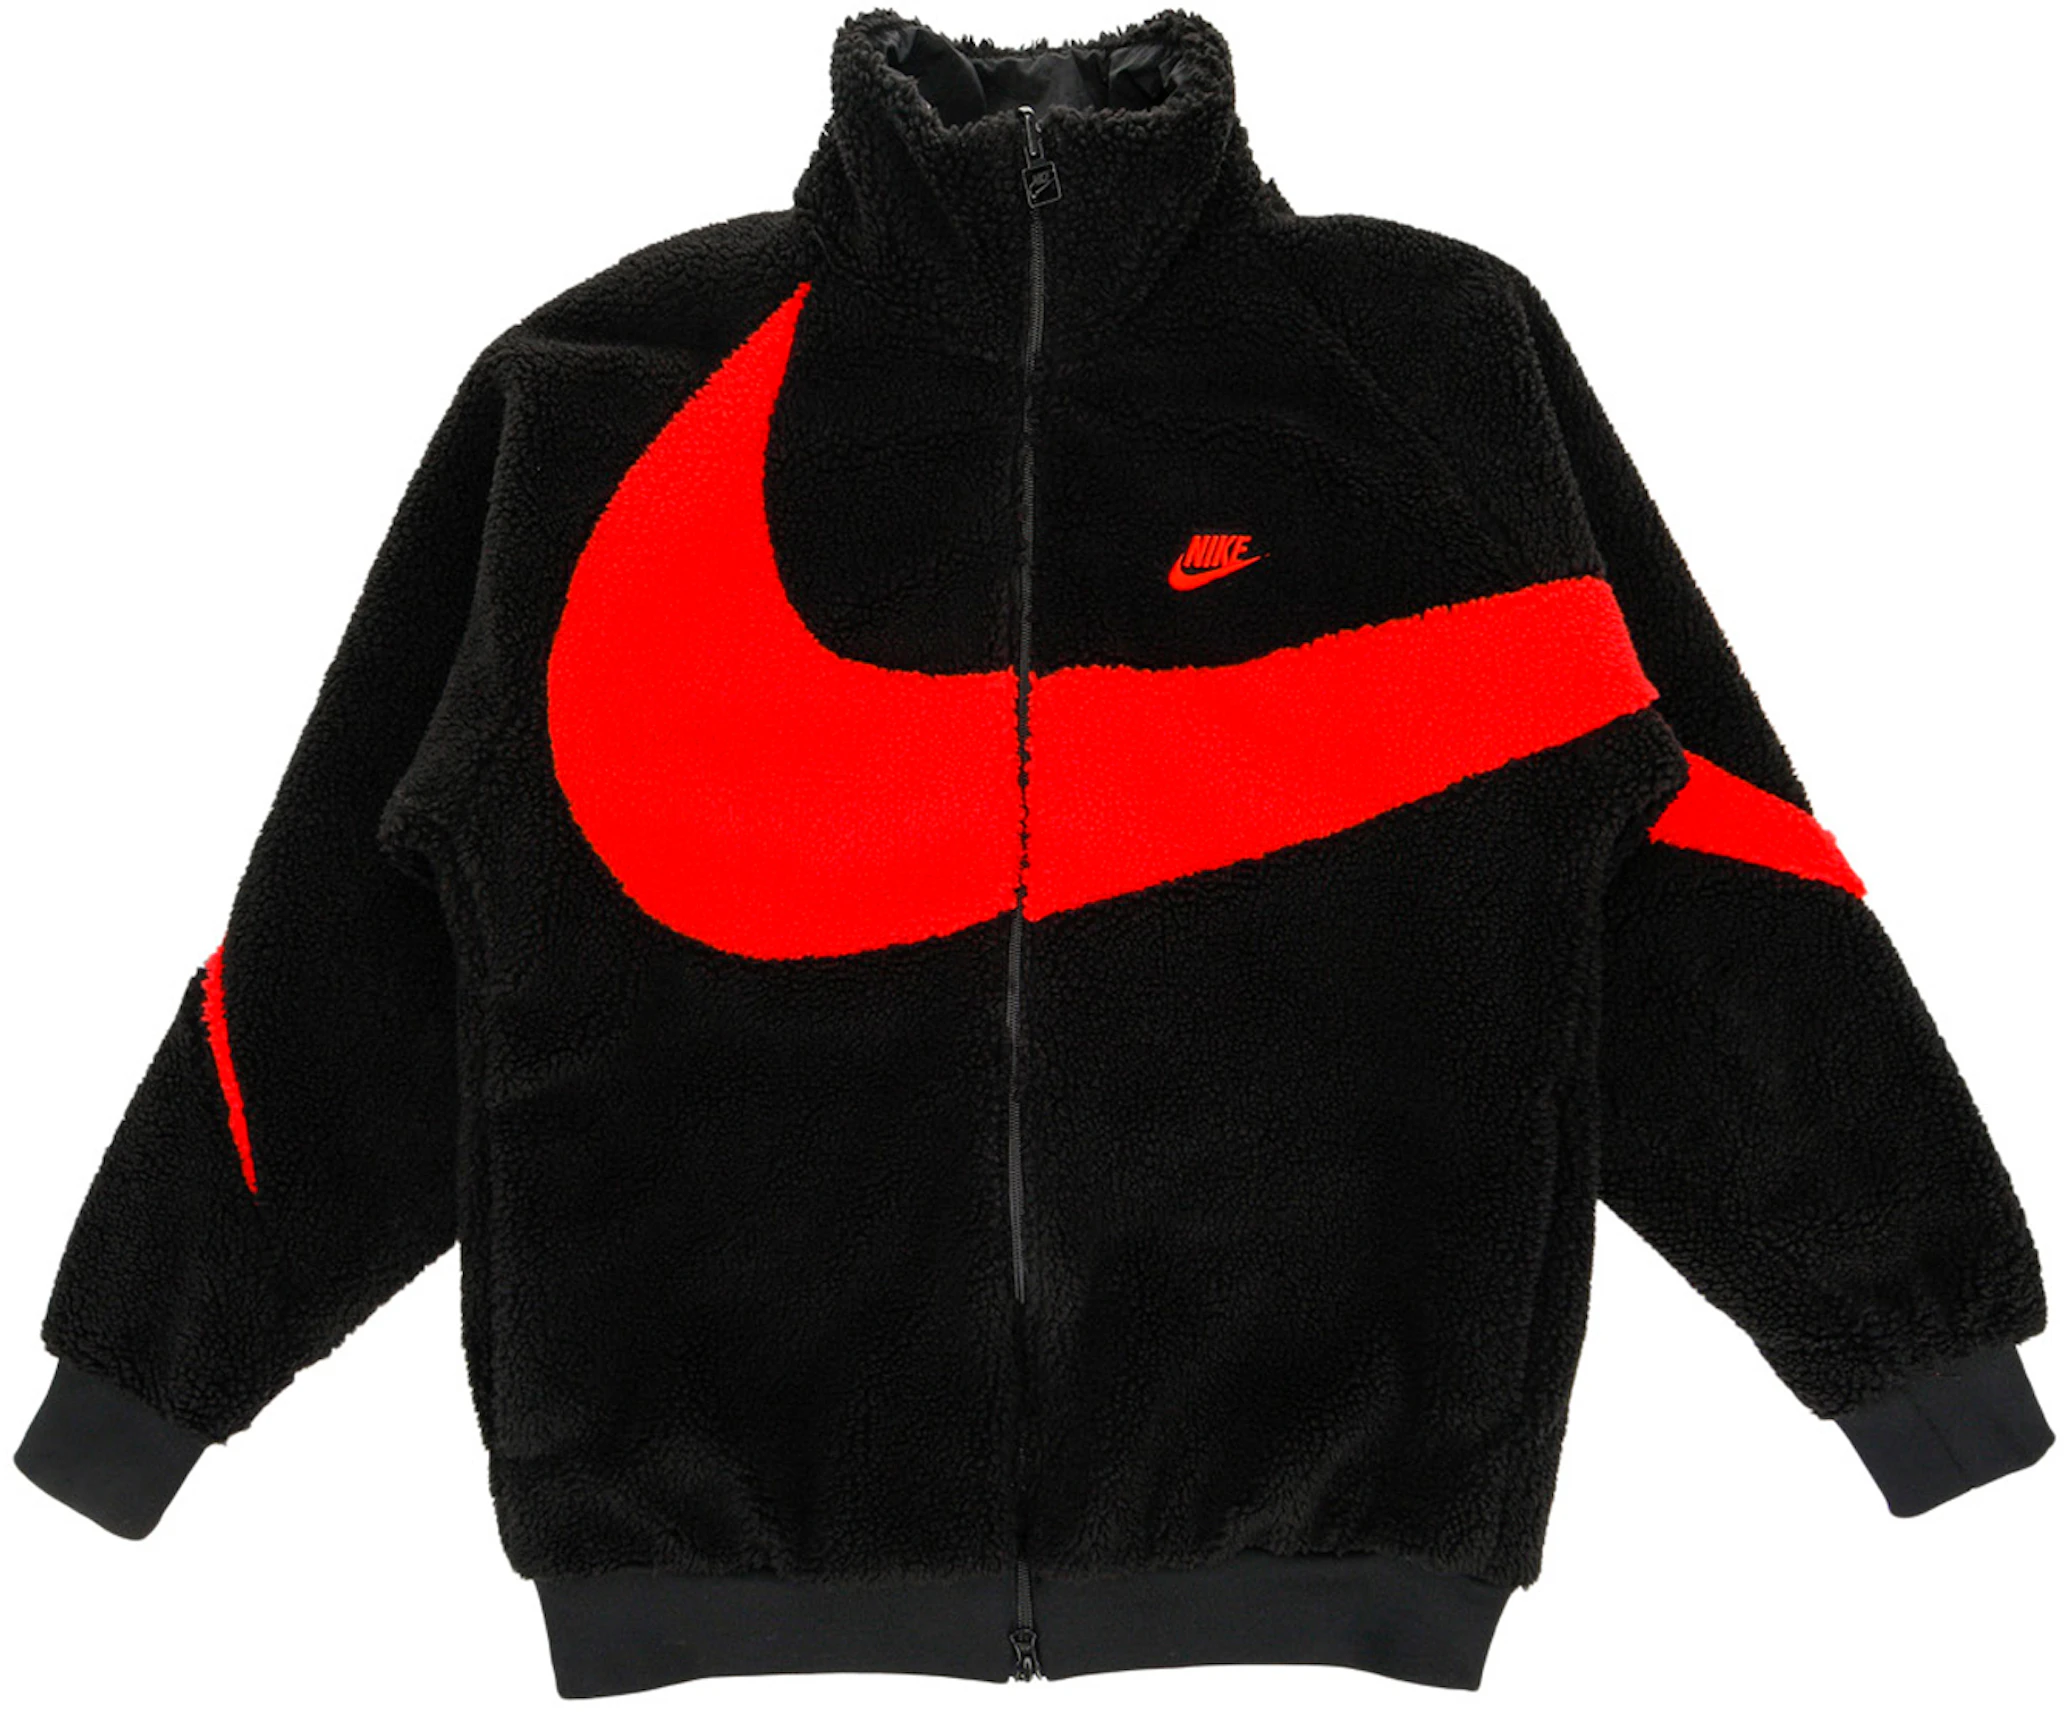 Acusación Asia mordedura Nike Big Swoosh Reversible Boa Jacket (Asia Sizing) Black Chili Red - FW21  - ES